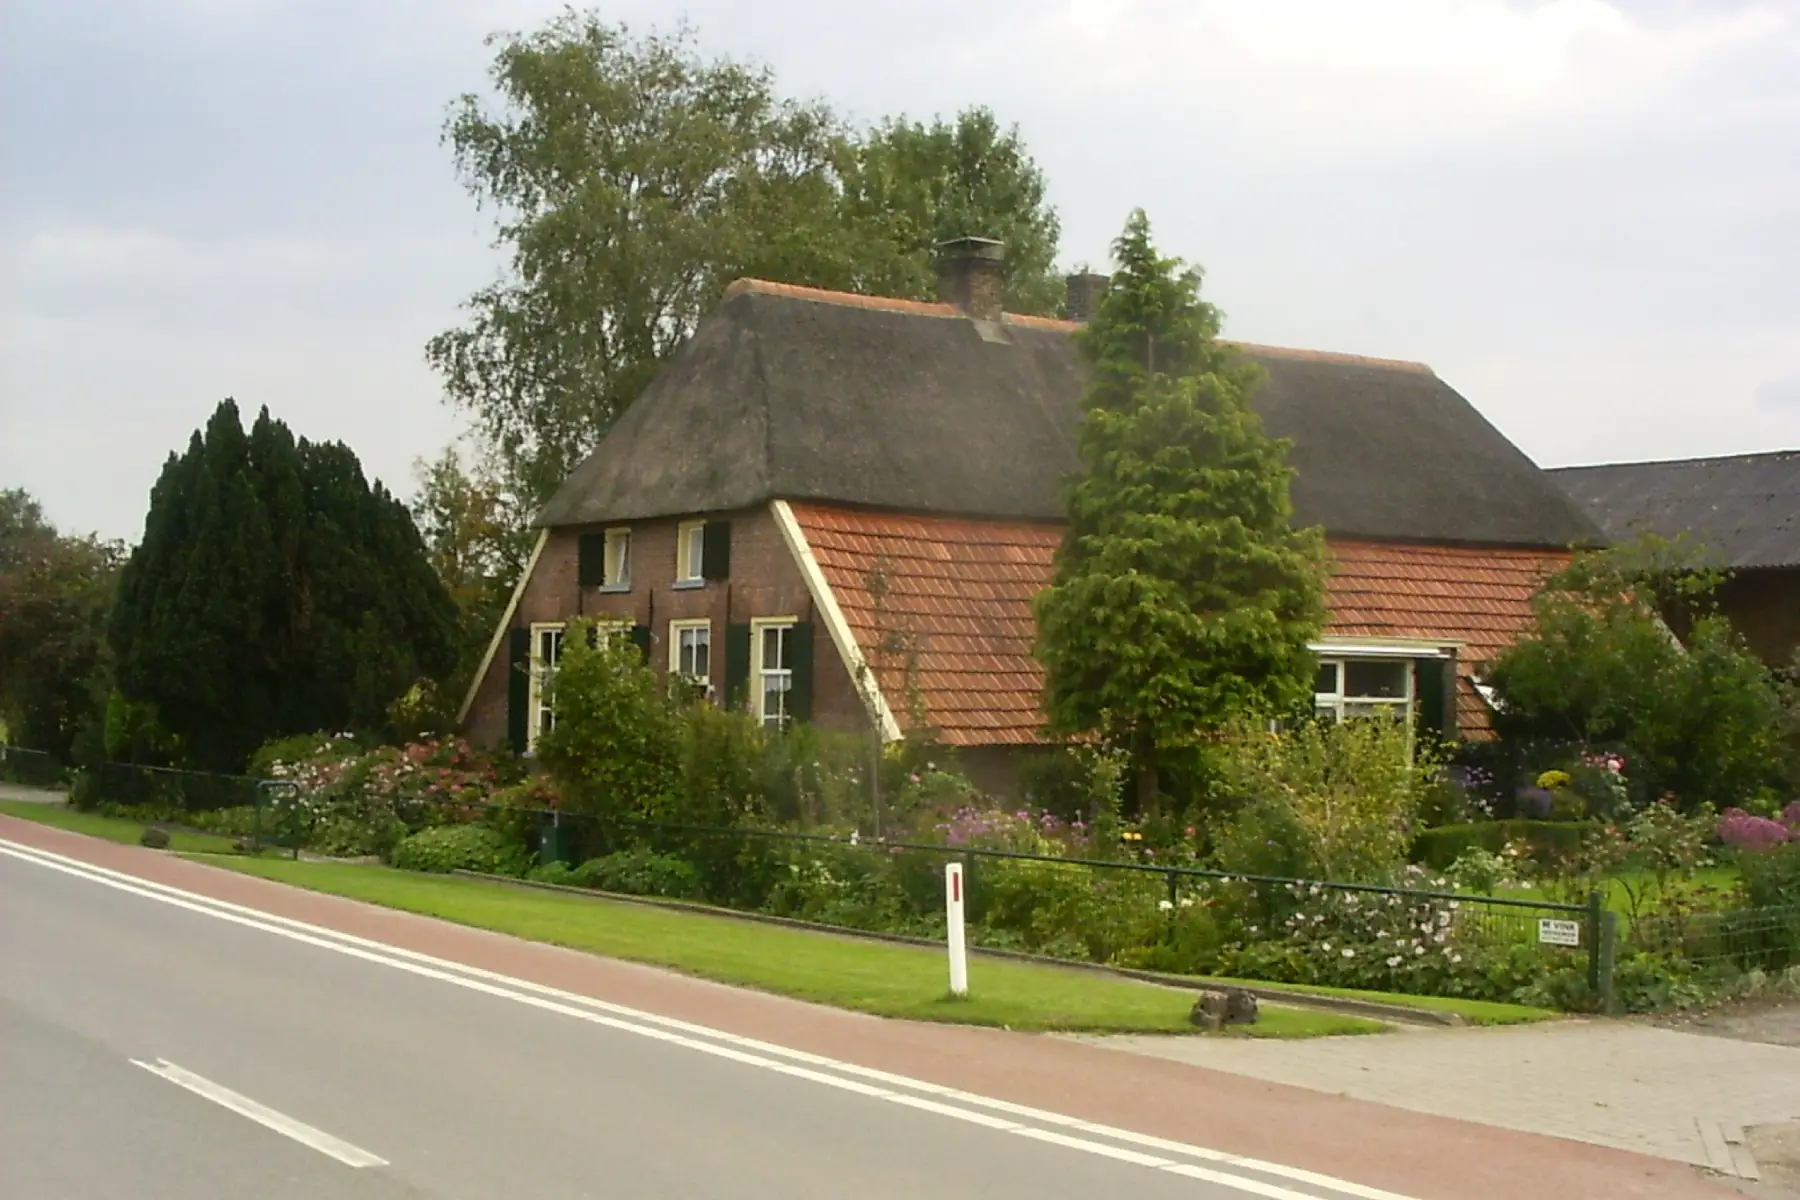 The outside of an old monument house in Knoppersweg in Randwijk, Amstelveen